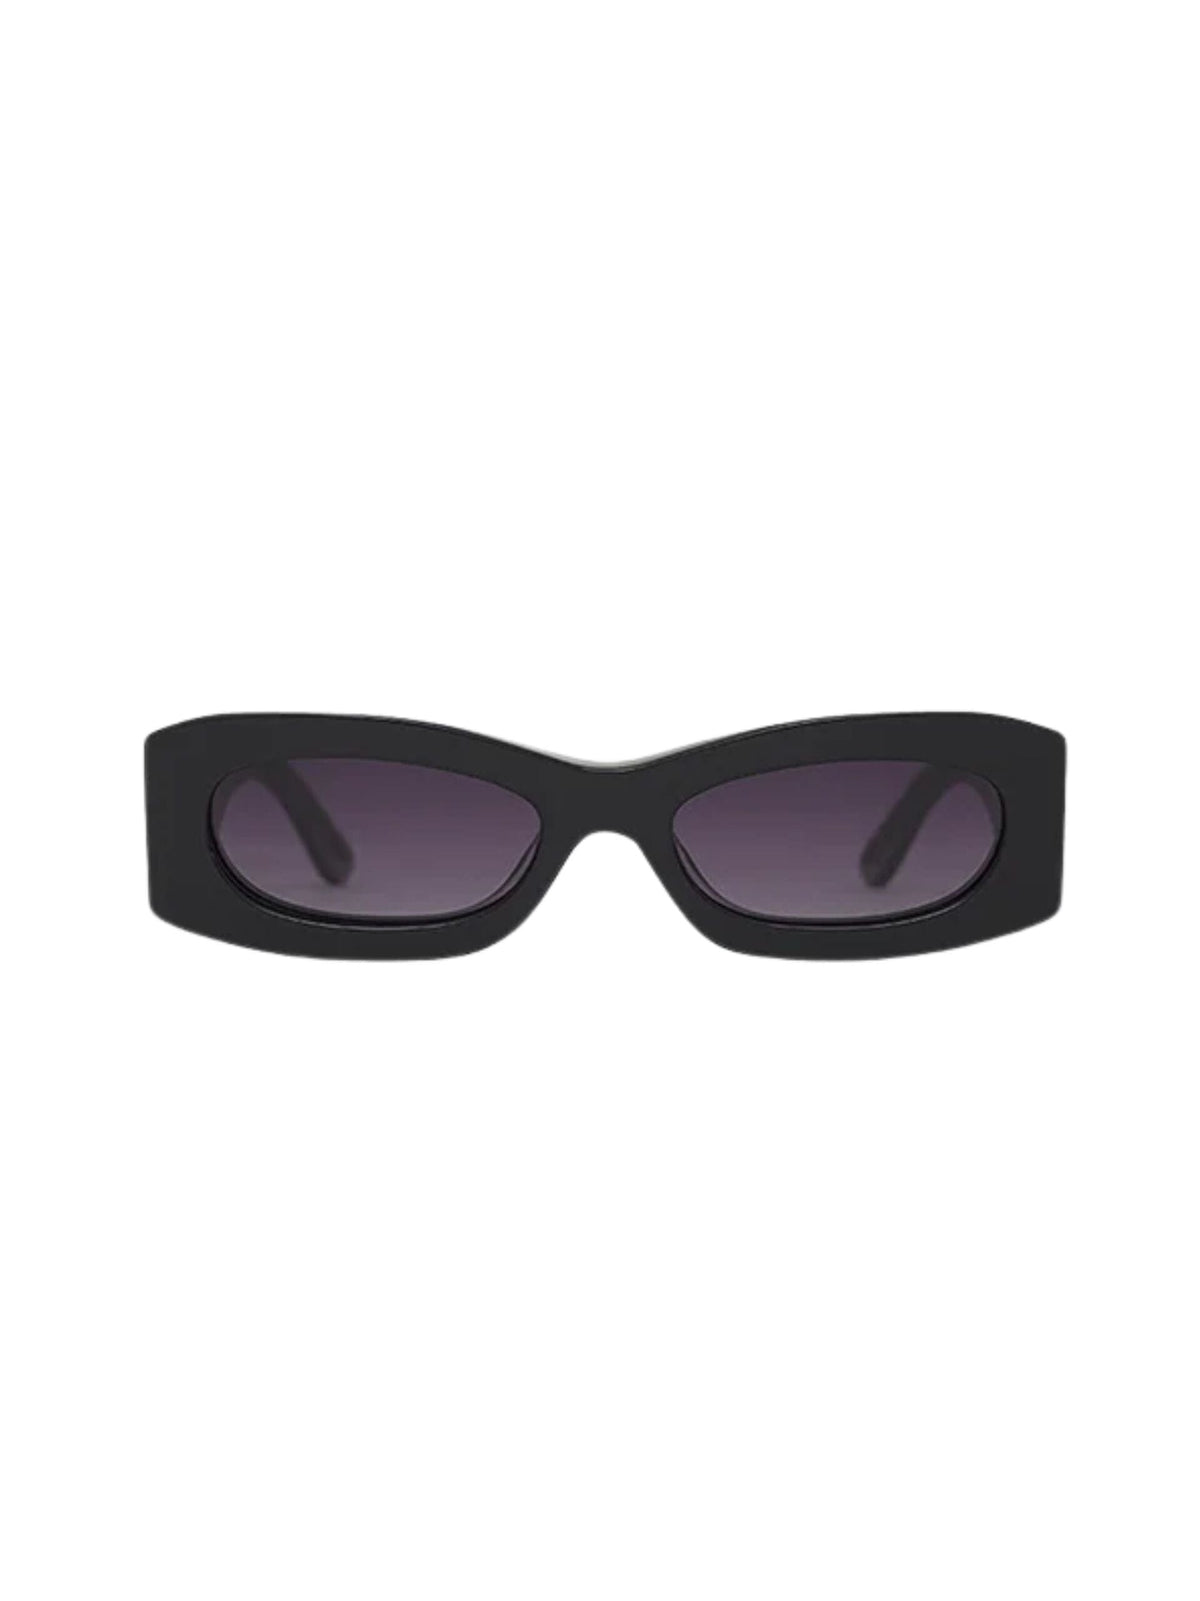 Malibu Sunglasses / Black Womens Anine Bing 